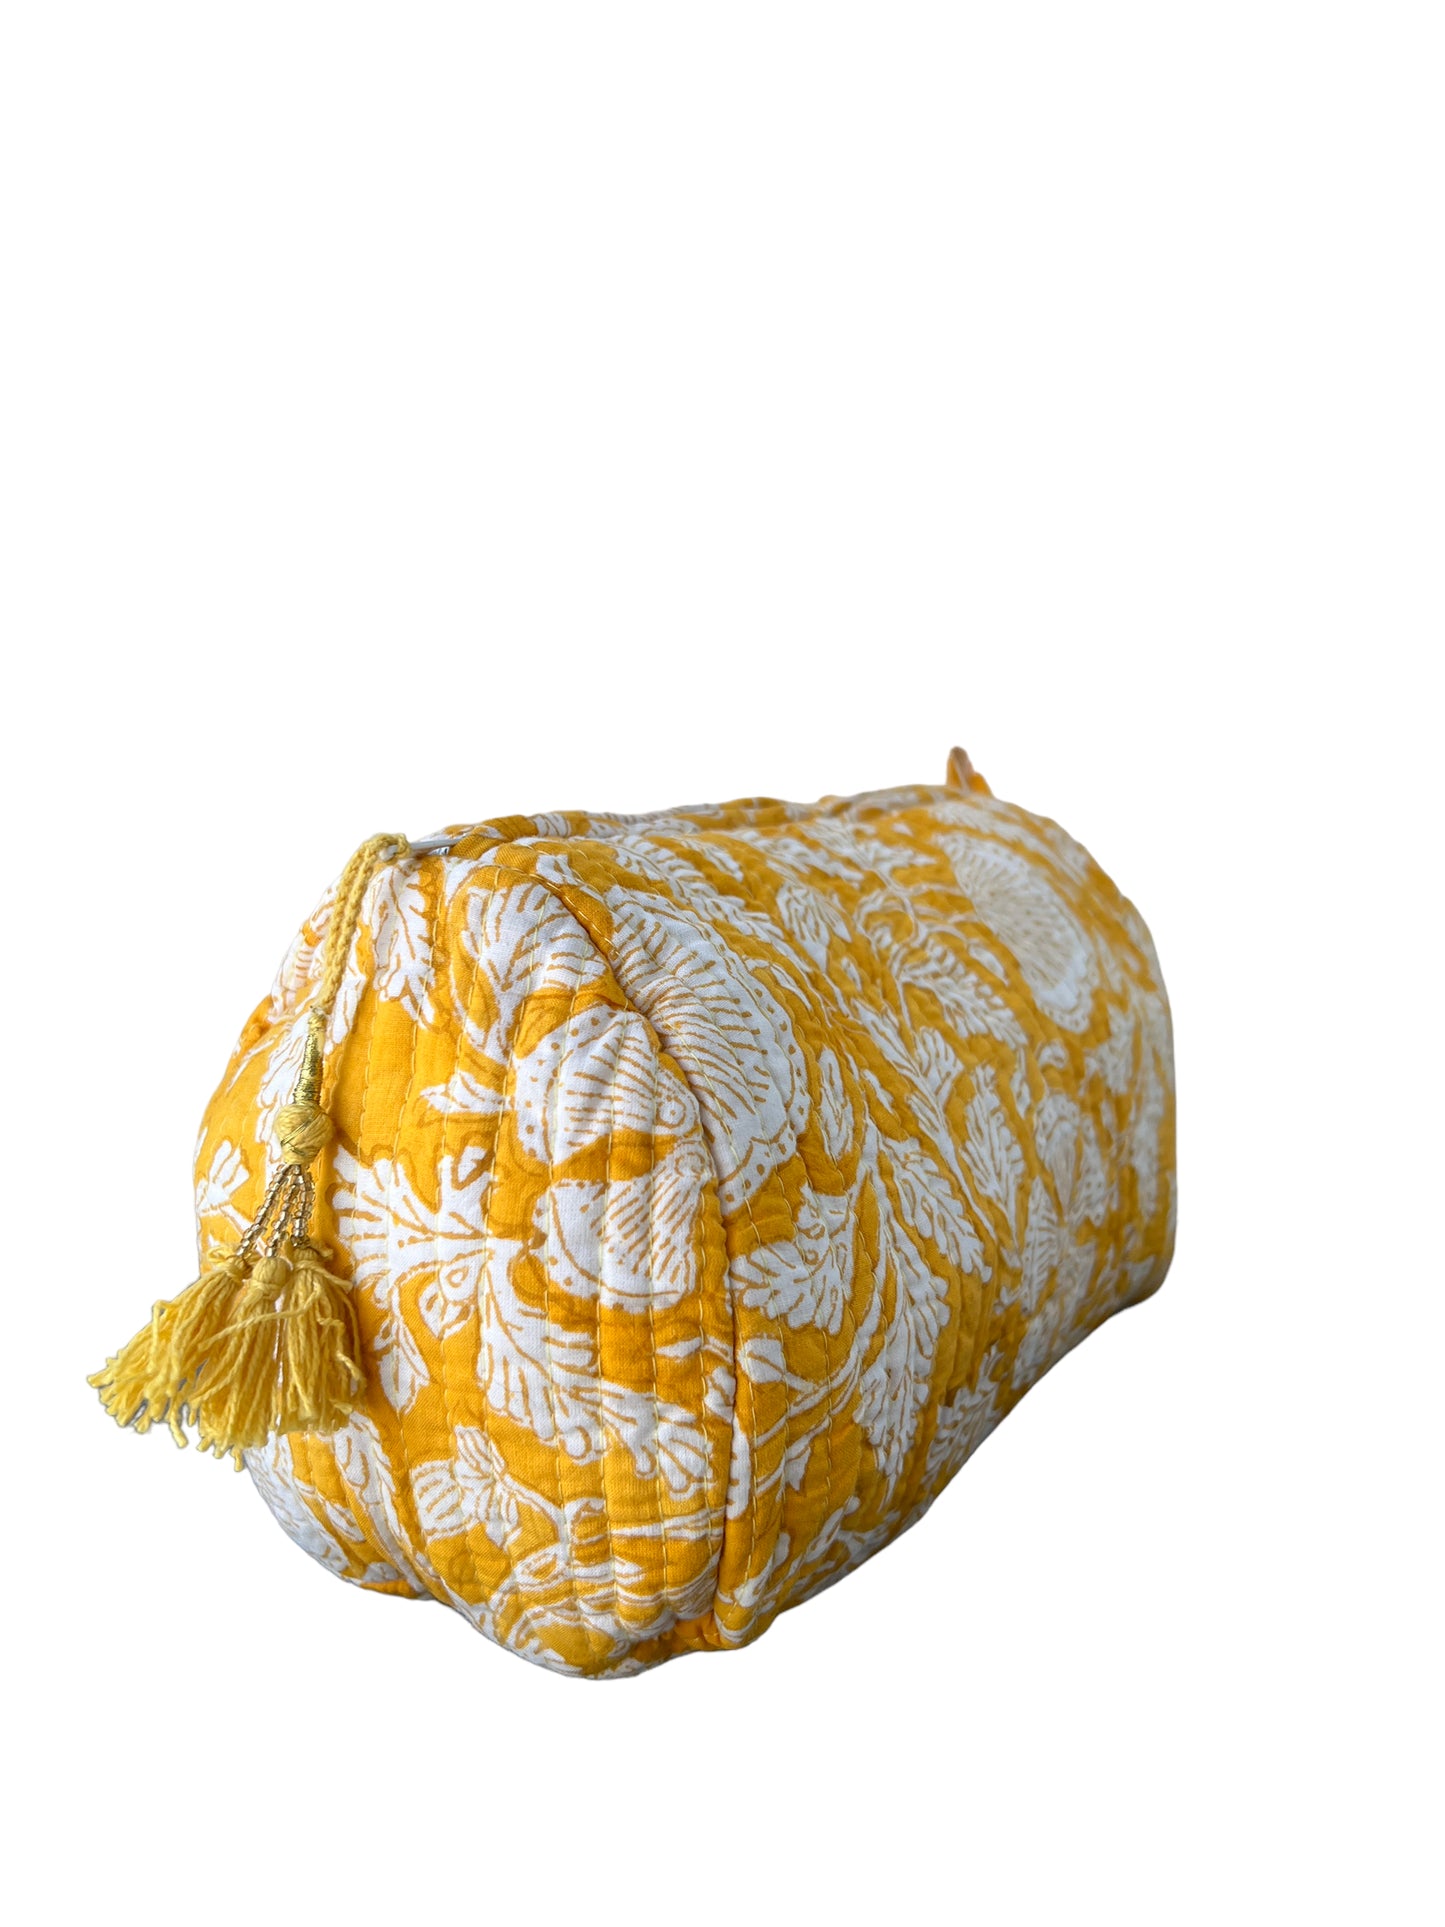 (M090) Make Up Bag Canary Yellow